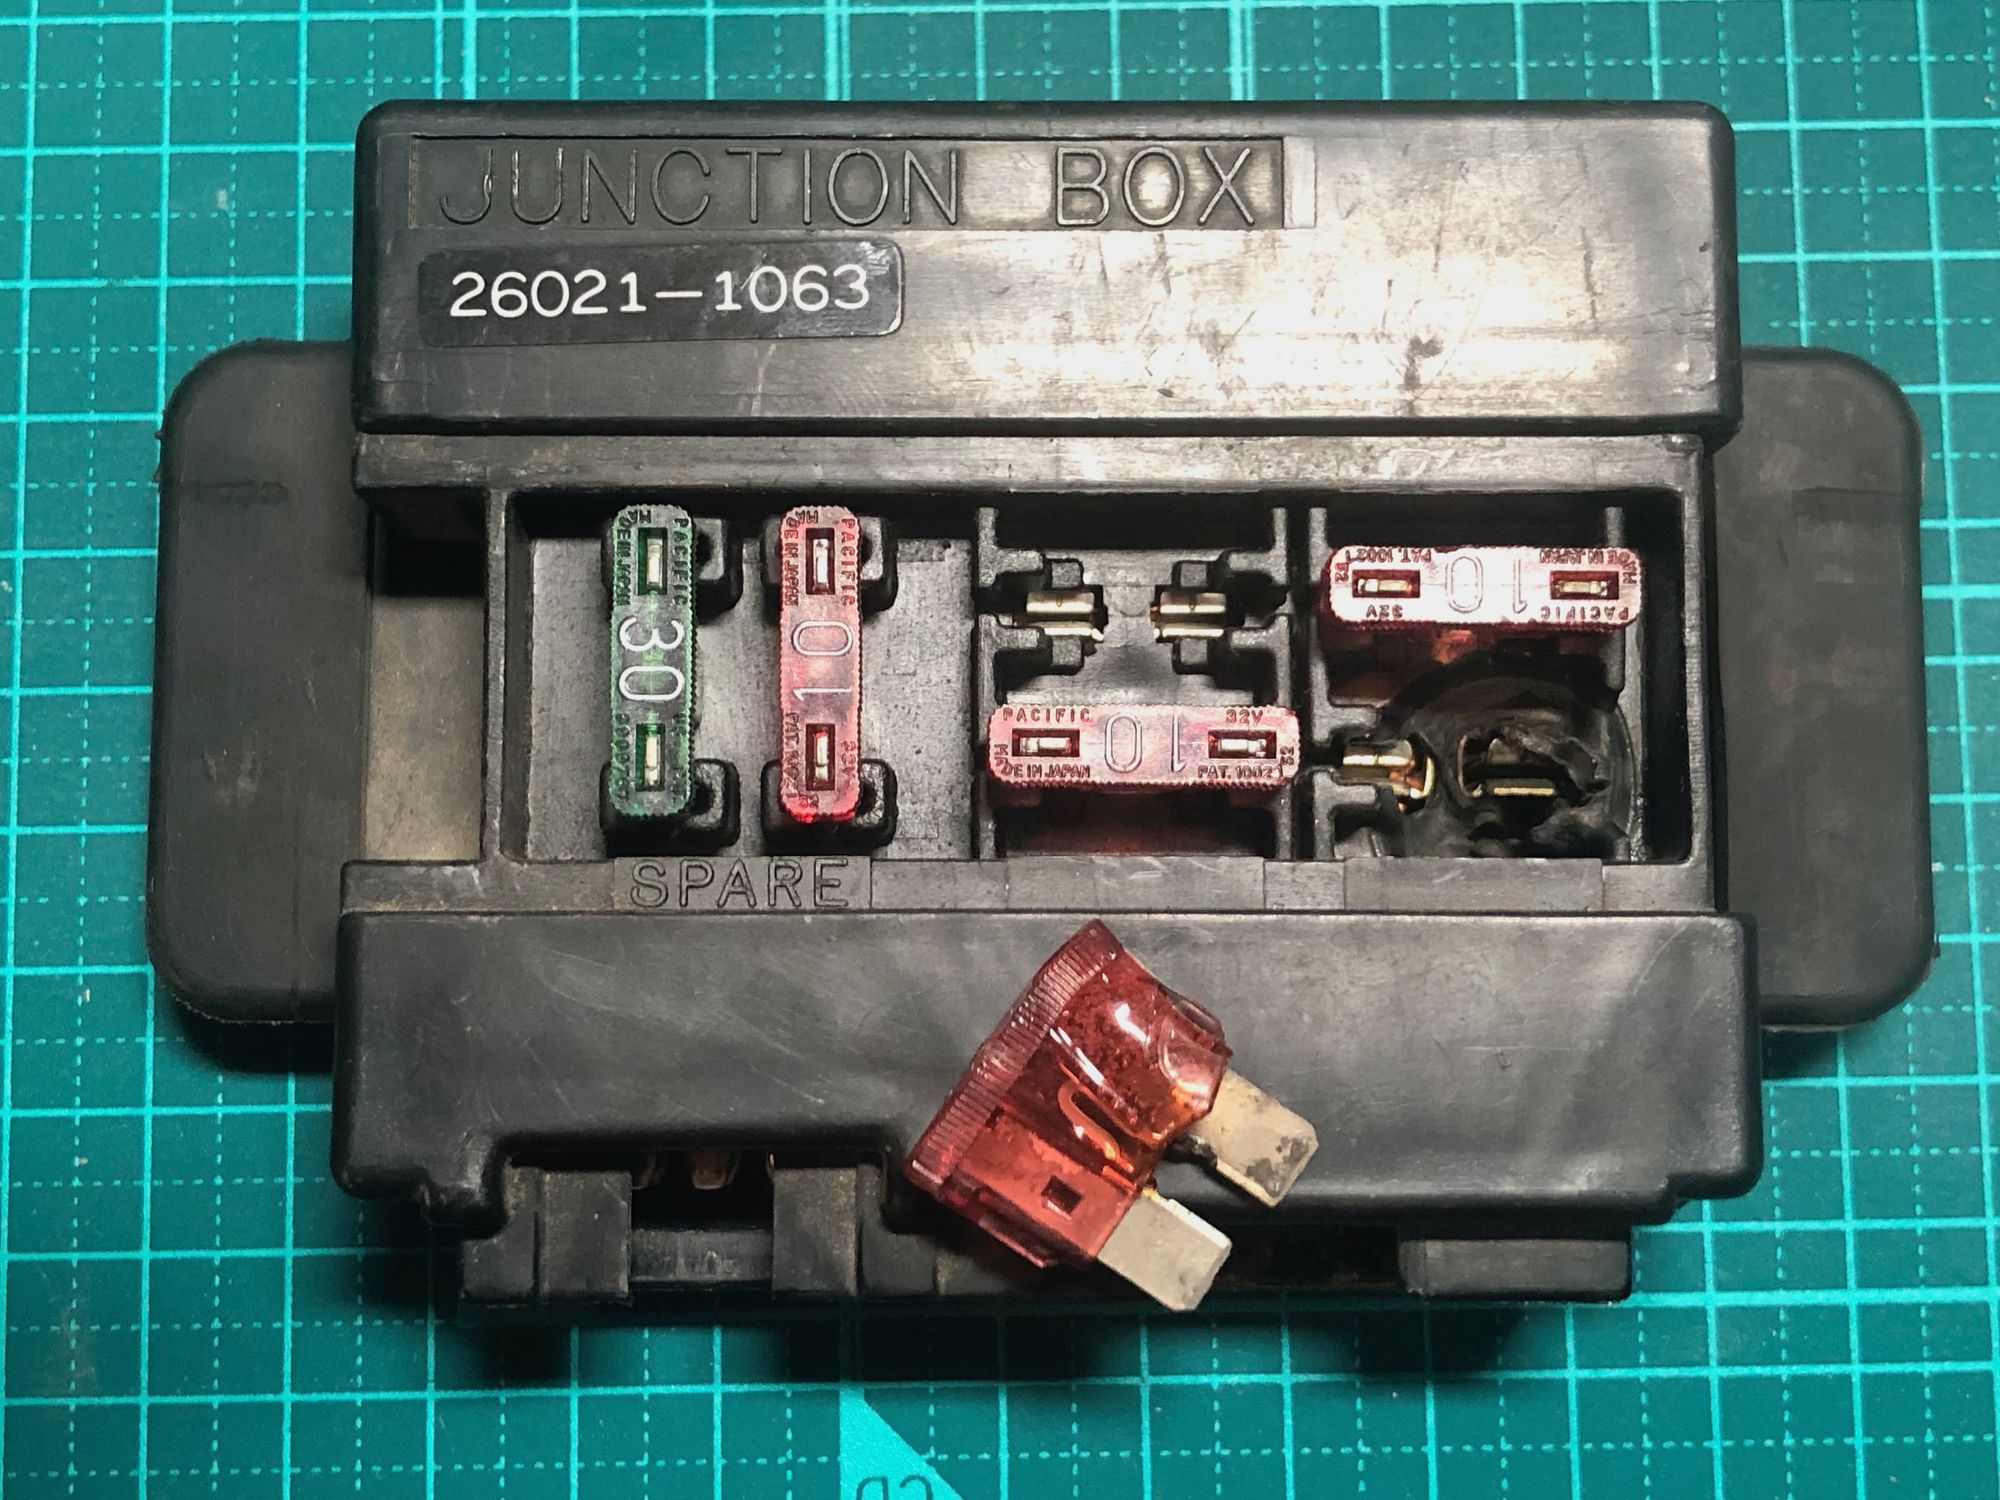 ZX-10ジャンクションボックス燃える